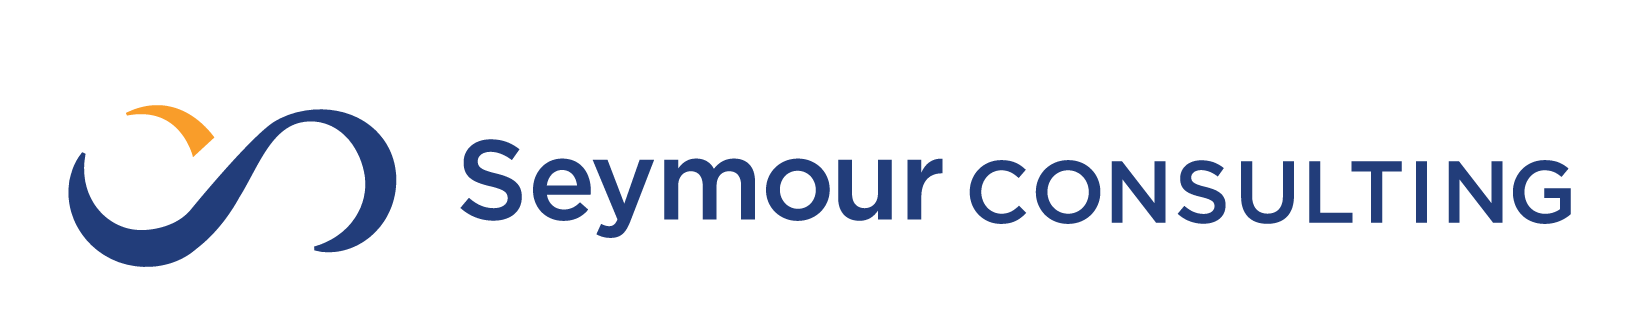 Seymour Consulting - Logo